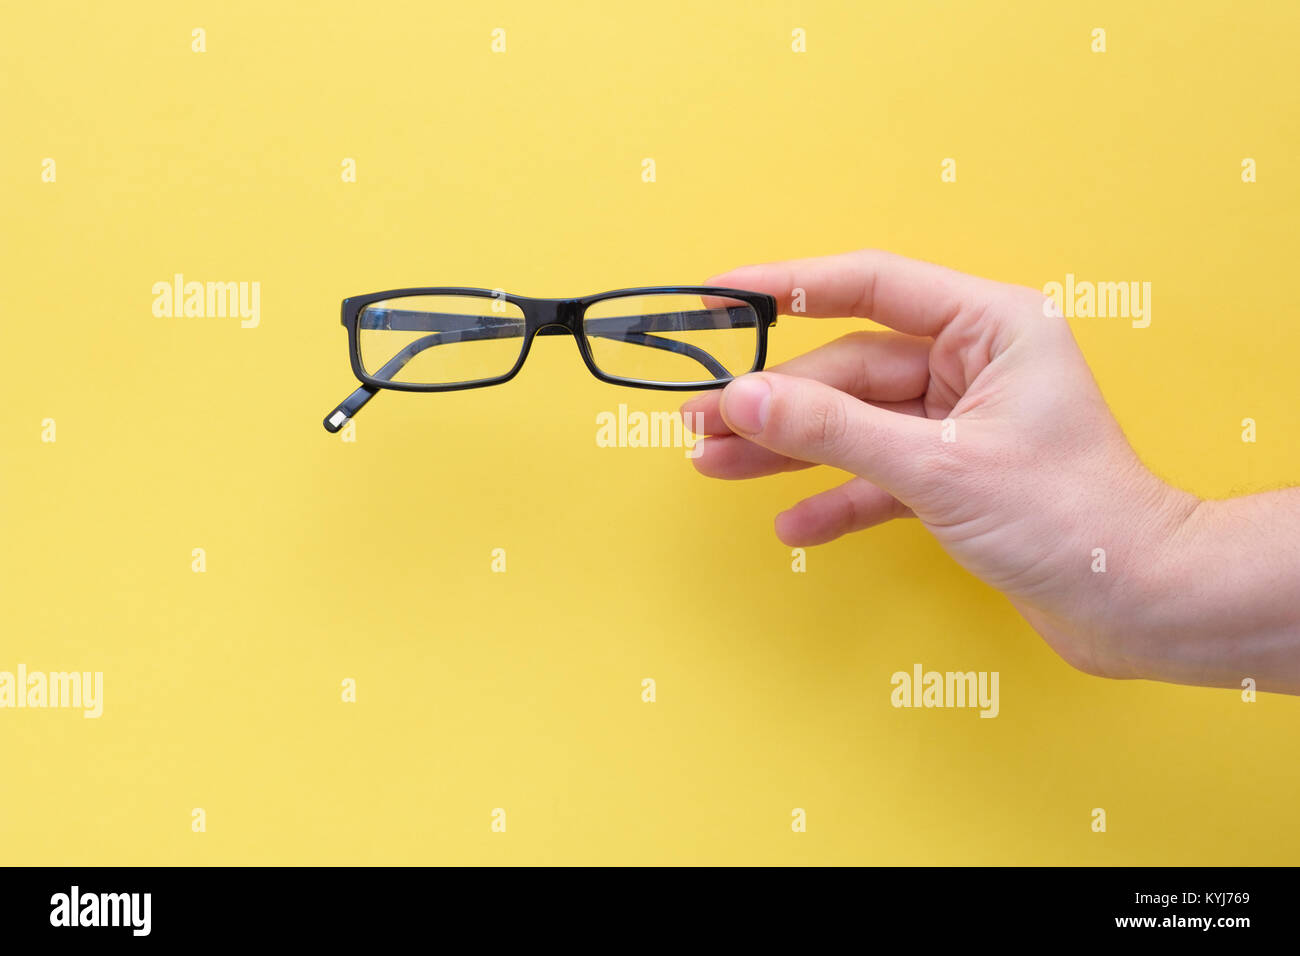 Eyesight concept.Hand holding glasses Stock Photo